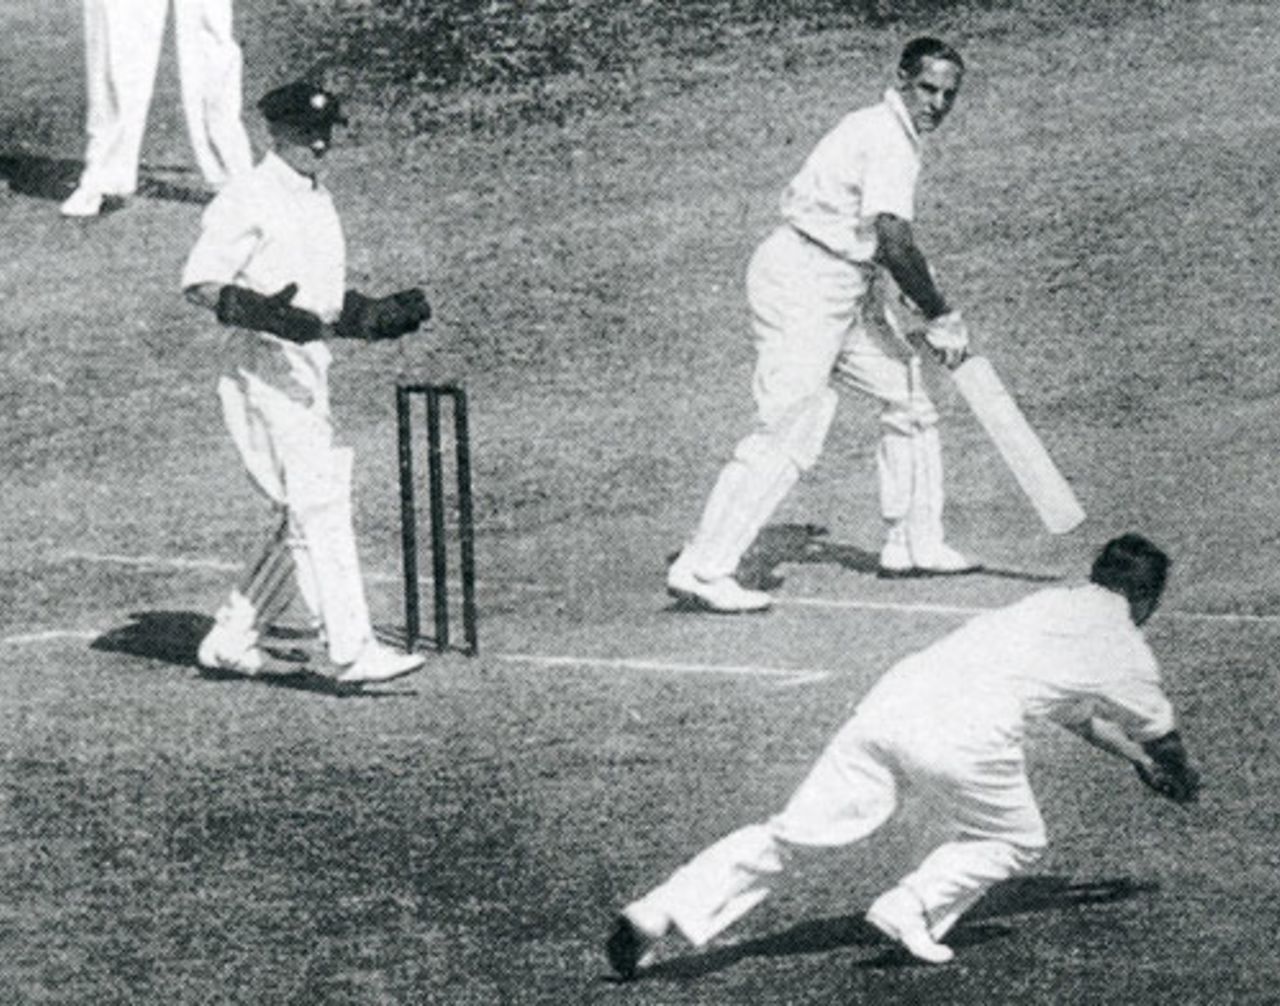 Vic Richardson just fails to catch Herbert Sutcliffe, England v Australia, 2nd Test, Melbourne, December 31, 1932